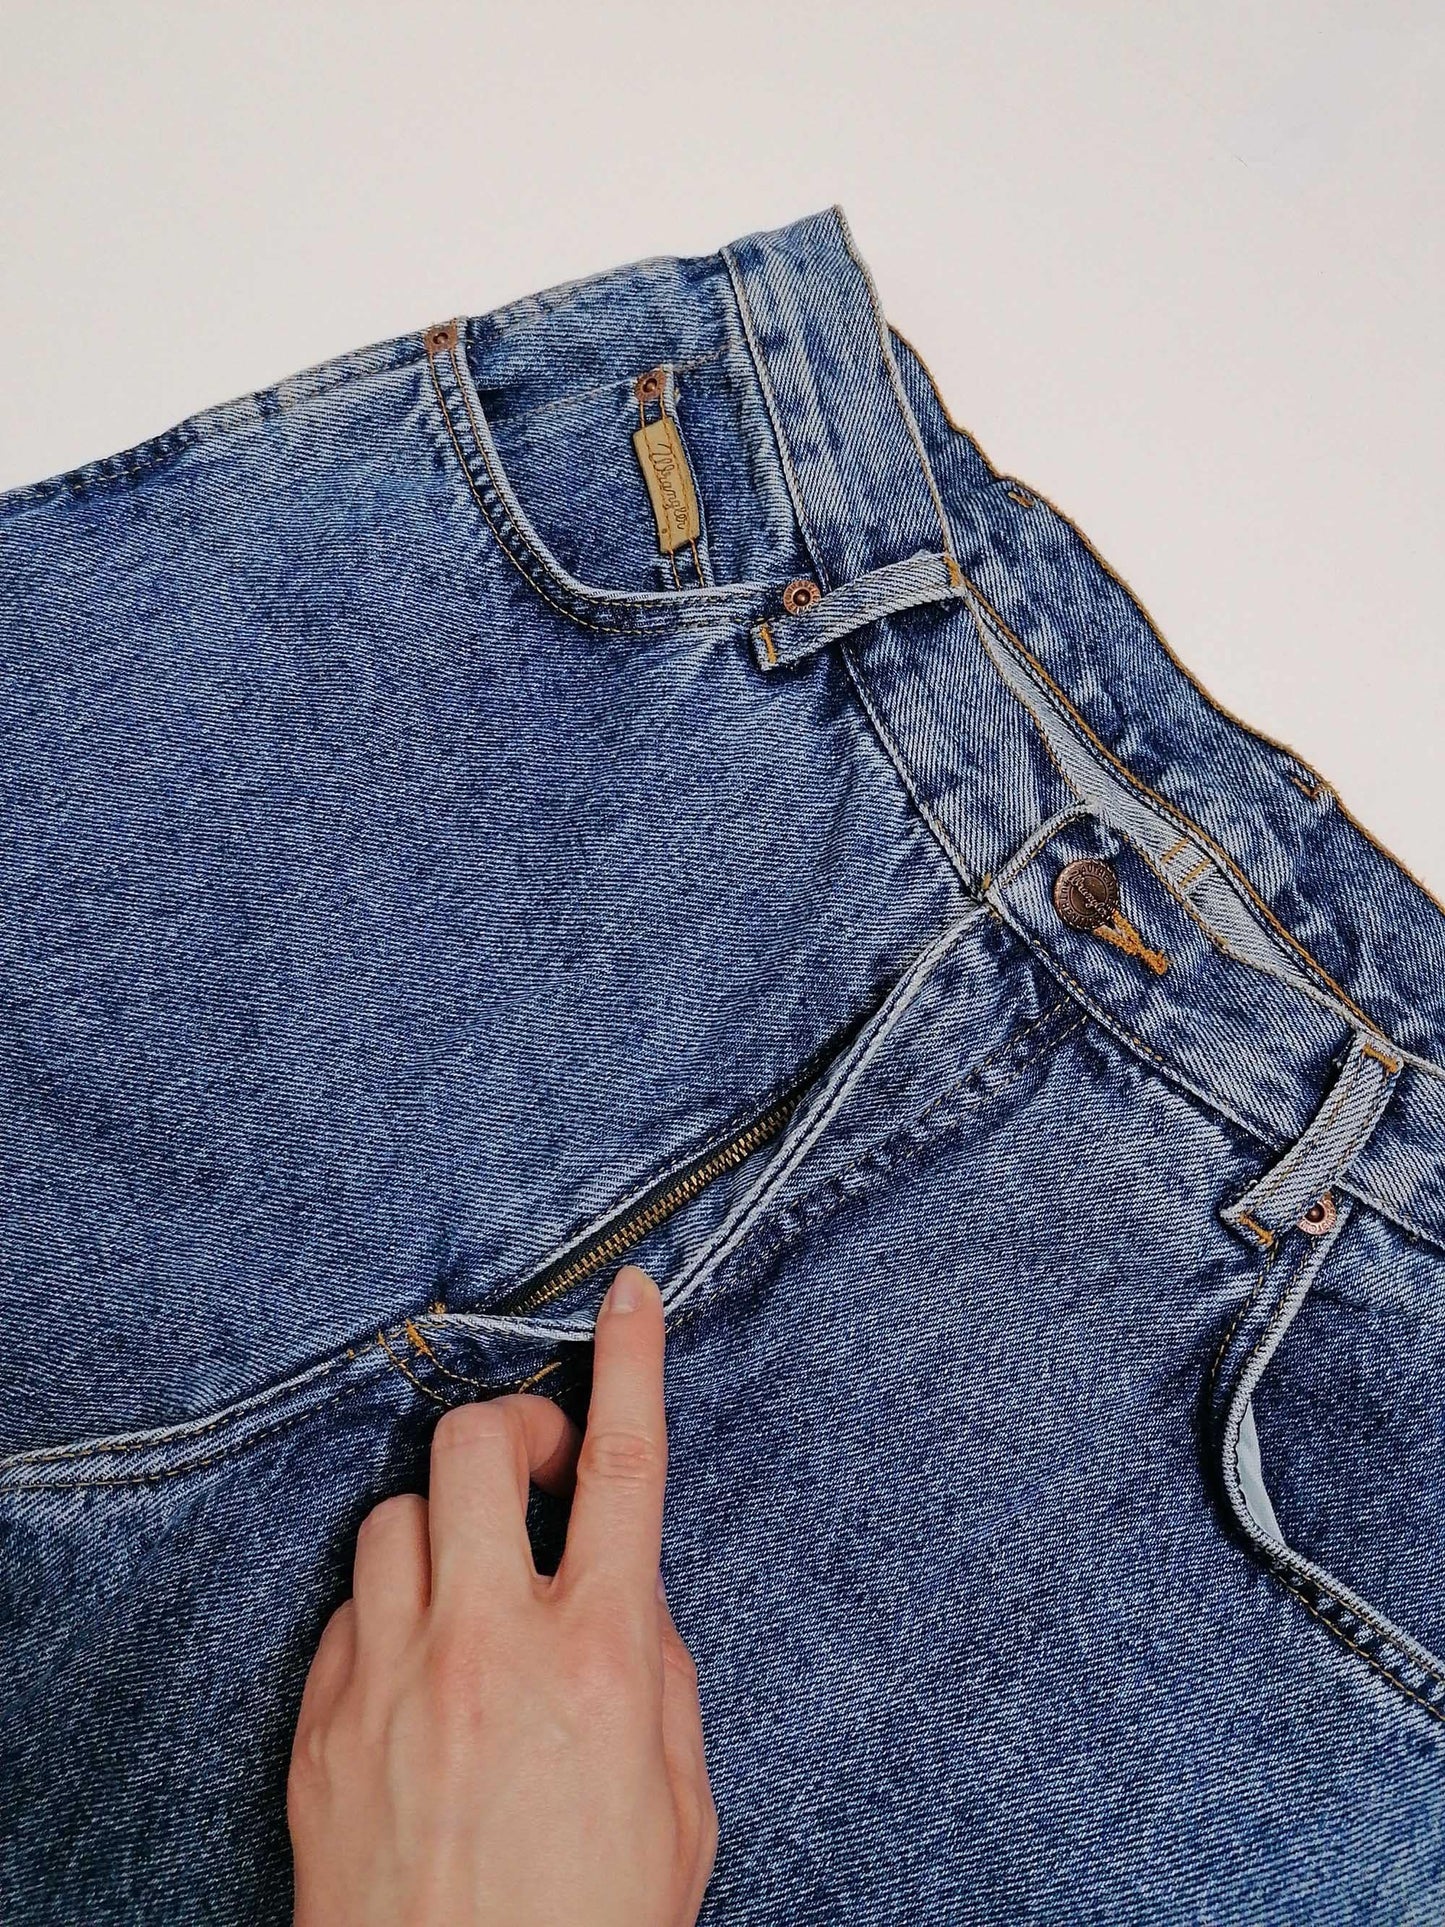 90's WRANGLER Stonewash Jeans Men Regular Fit ~ W 33 - 34/ L 32